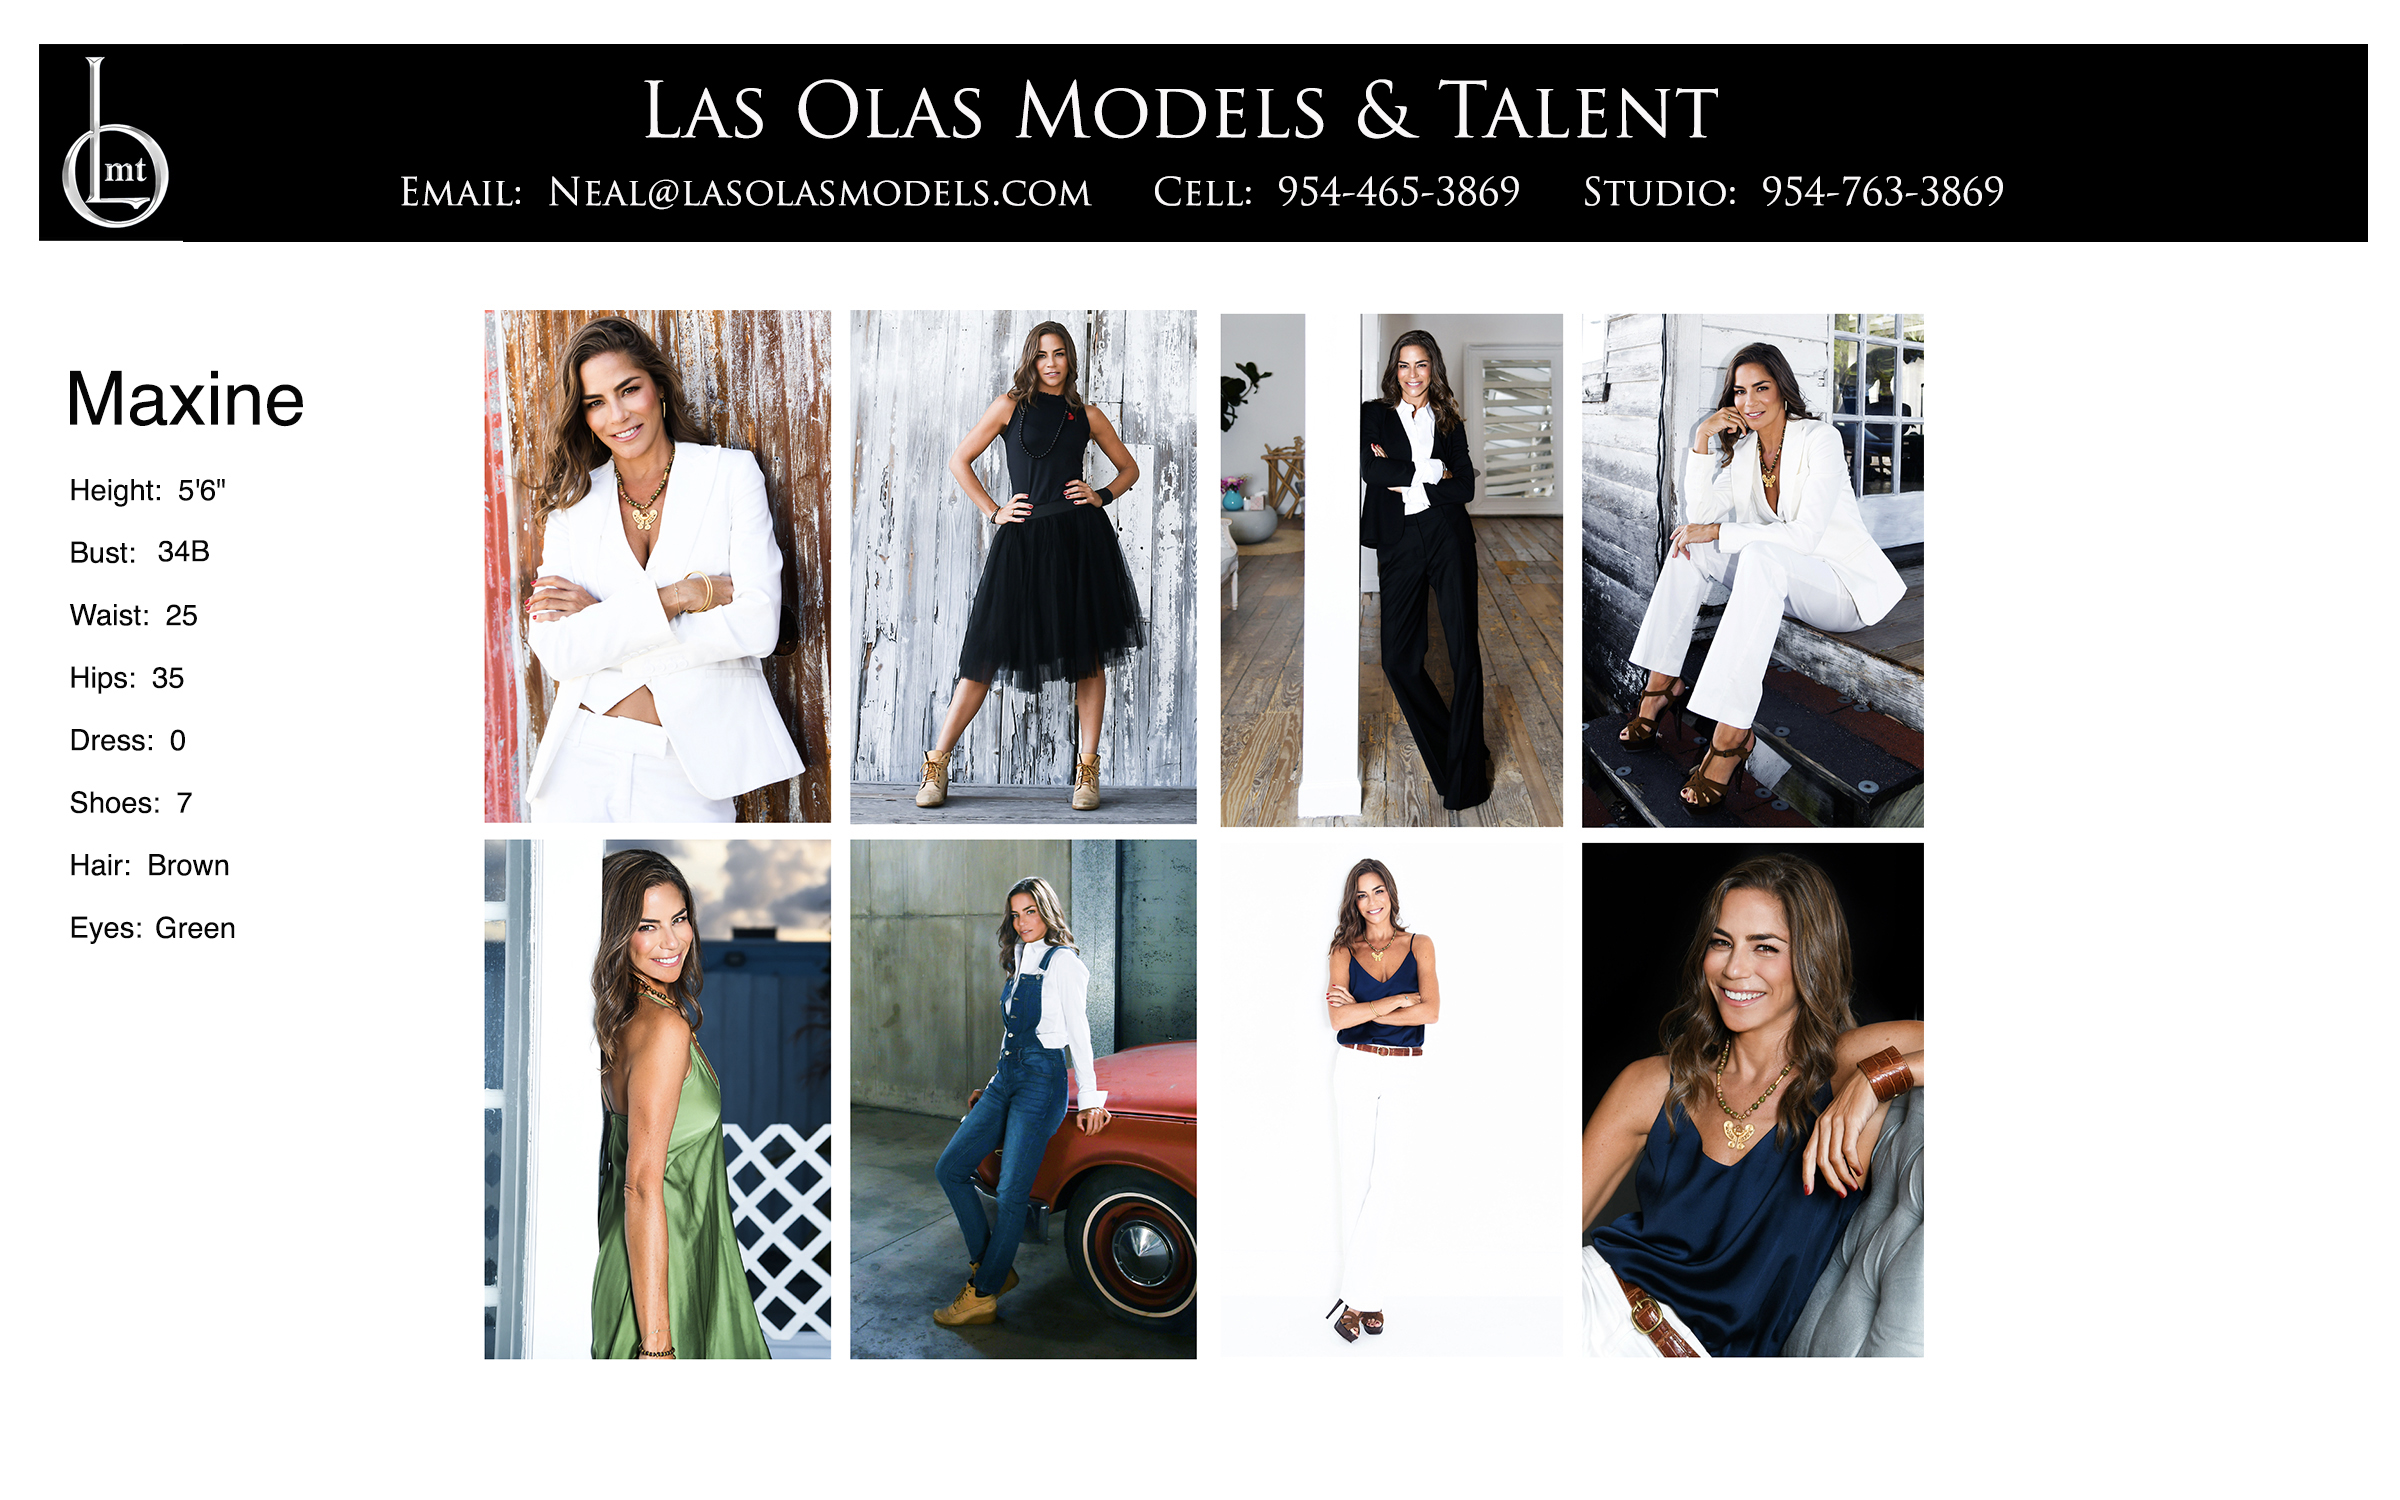 Models Fort Lauderdale Miami South Florida - Print Video Commercial Catalog - Las Olas Models & Talent - Maxine Comp